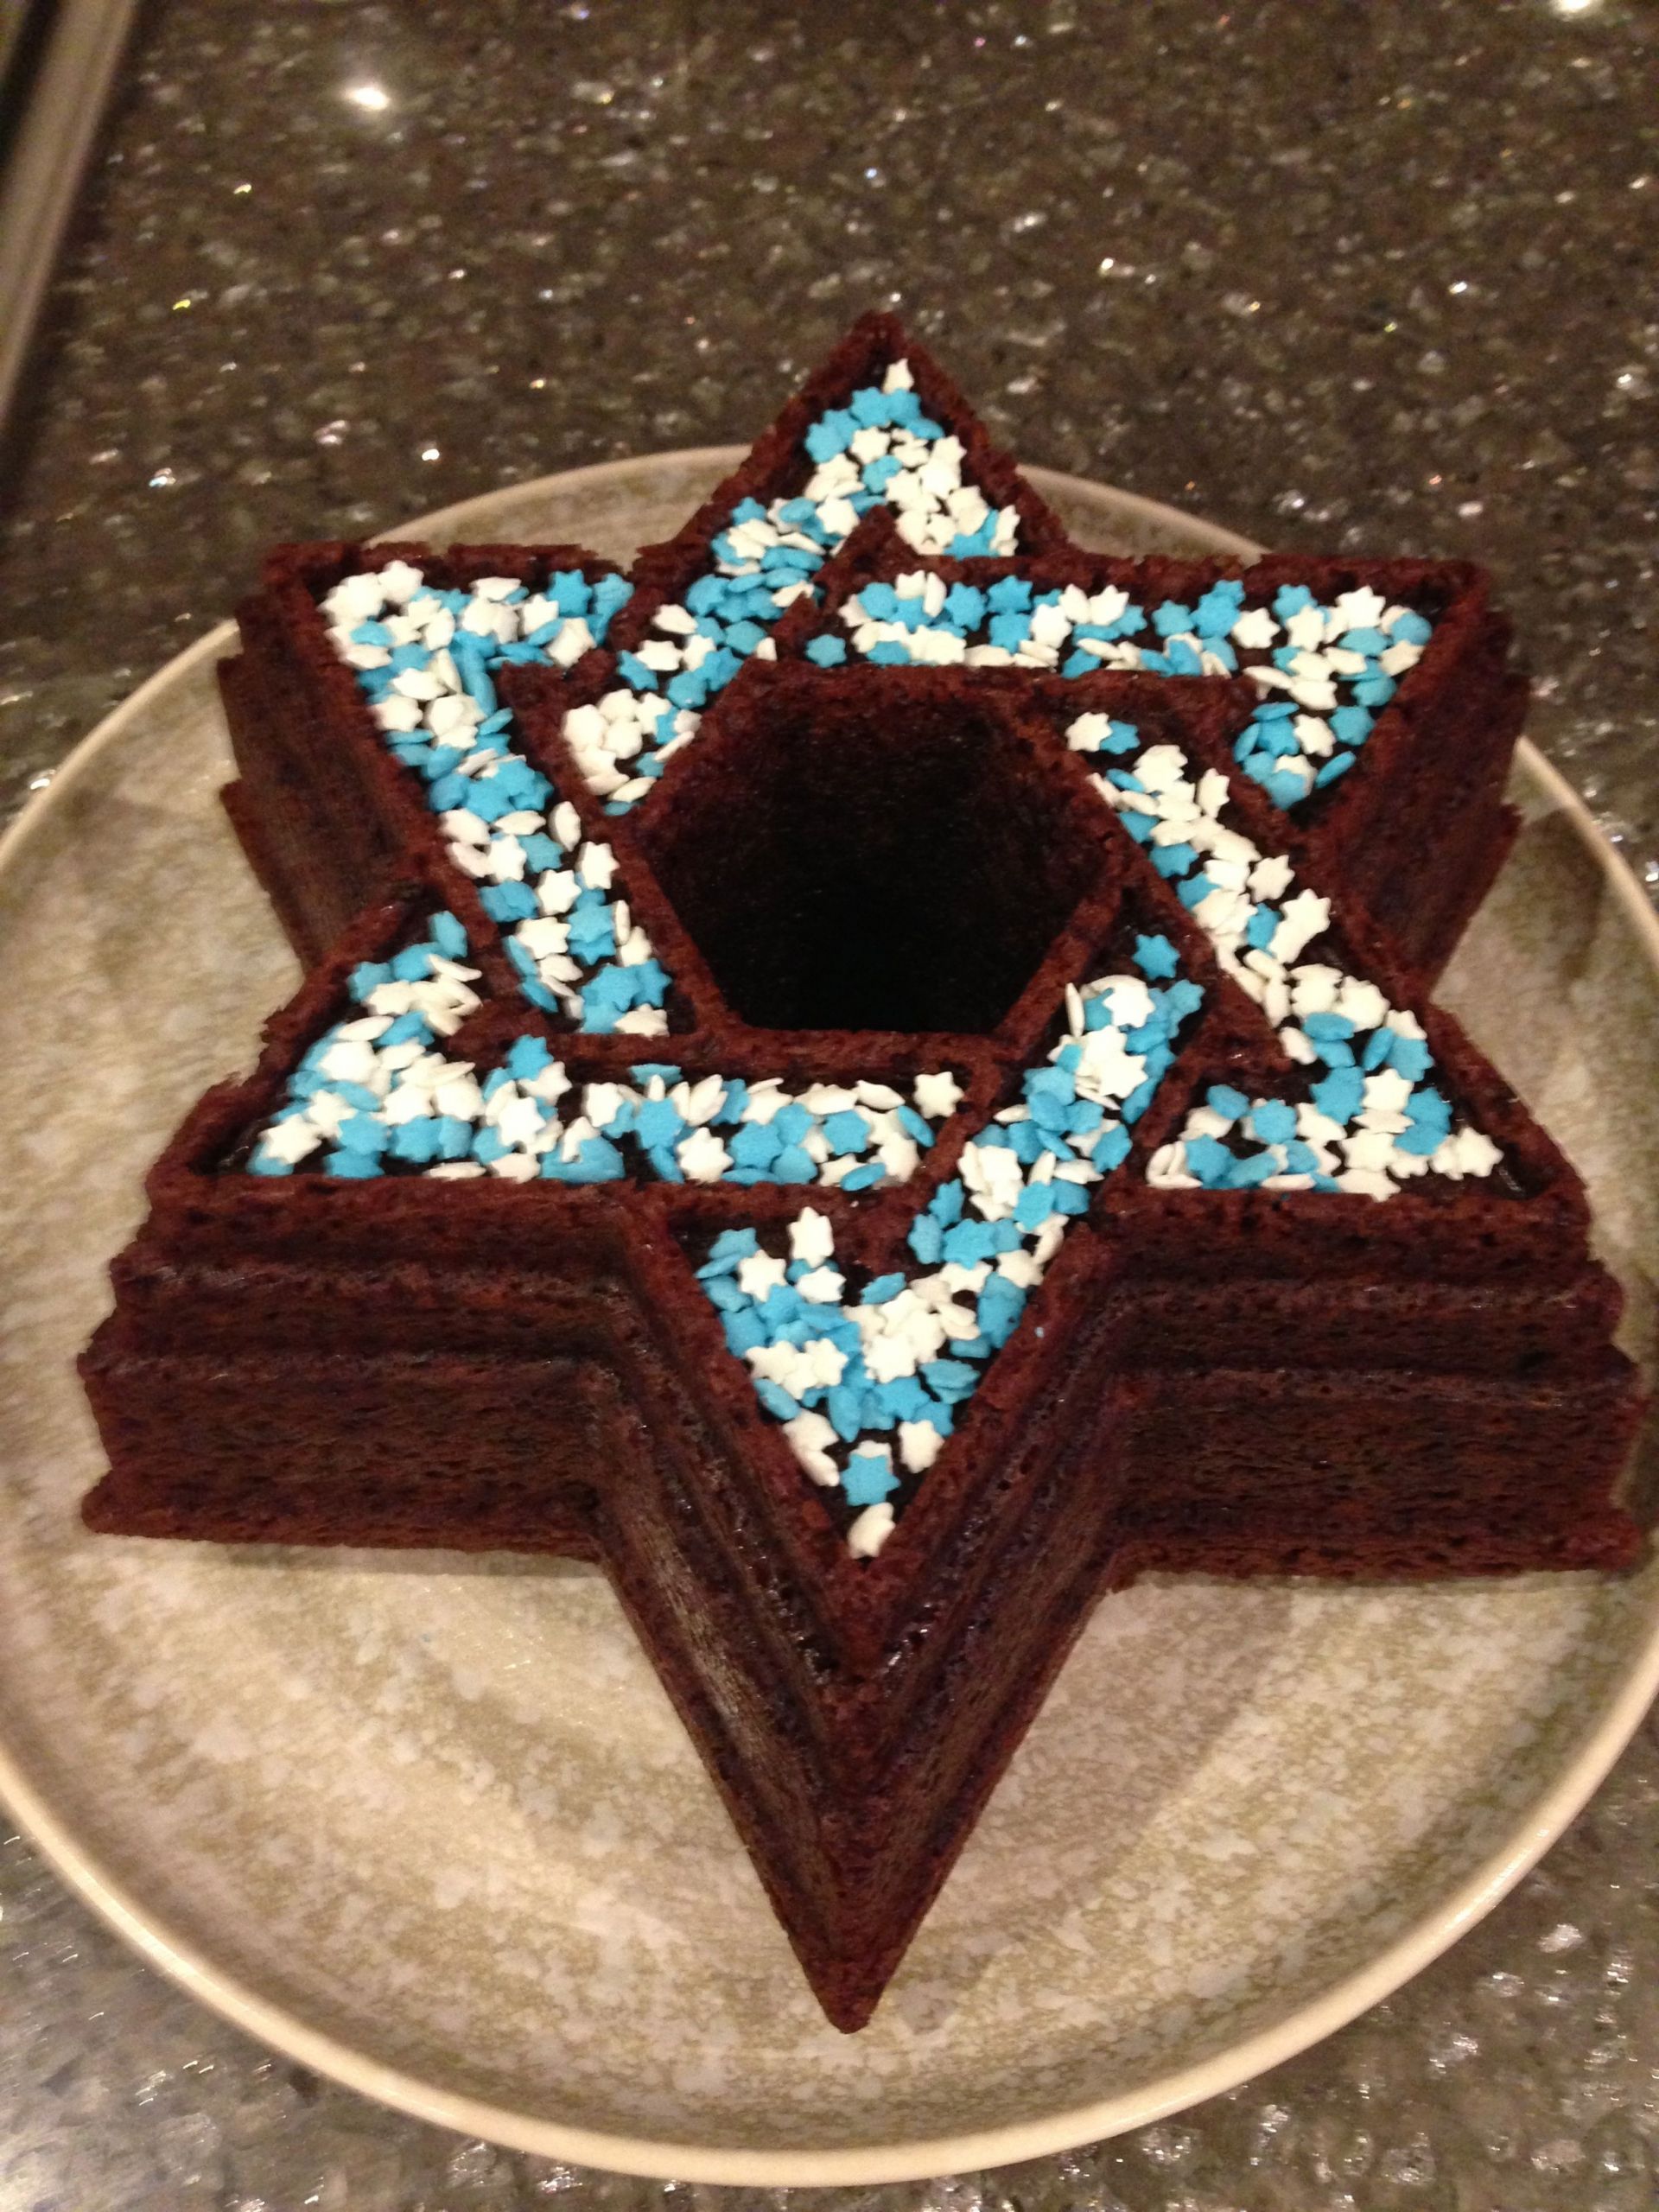 Traditional Hanukkah Desserts
 star of david cake for Hanukkah Hanukkah